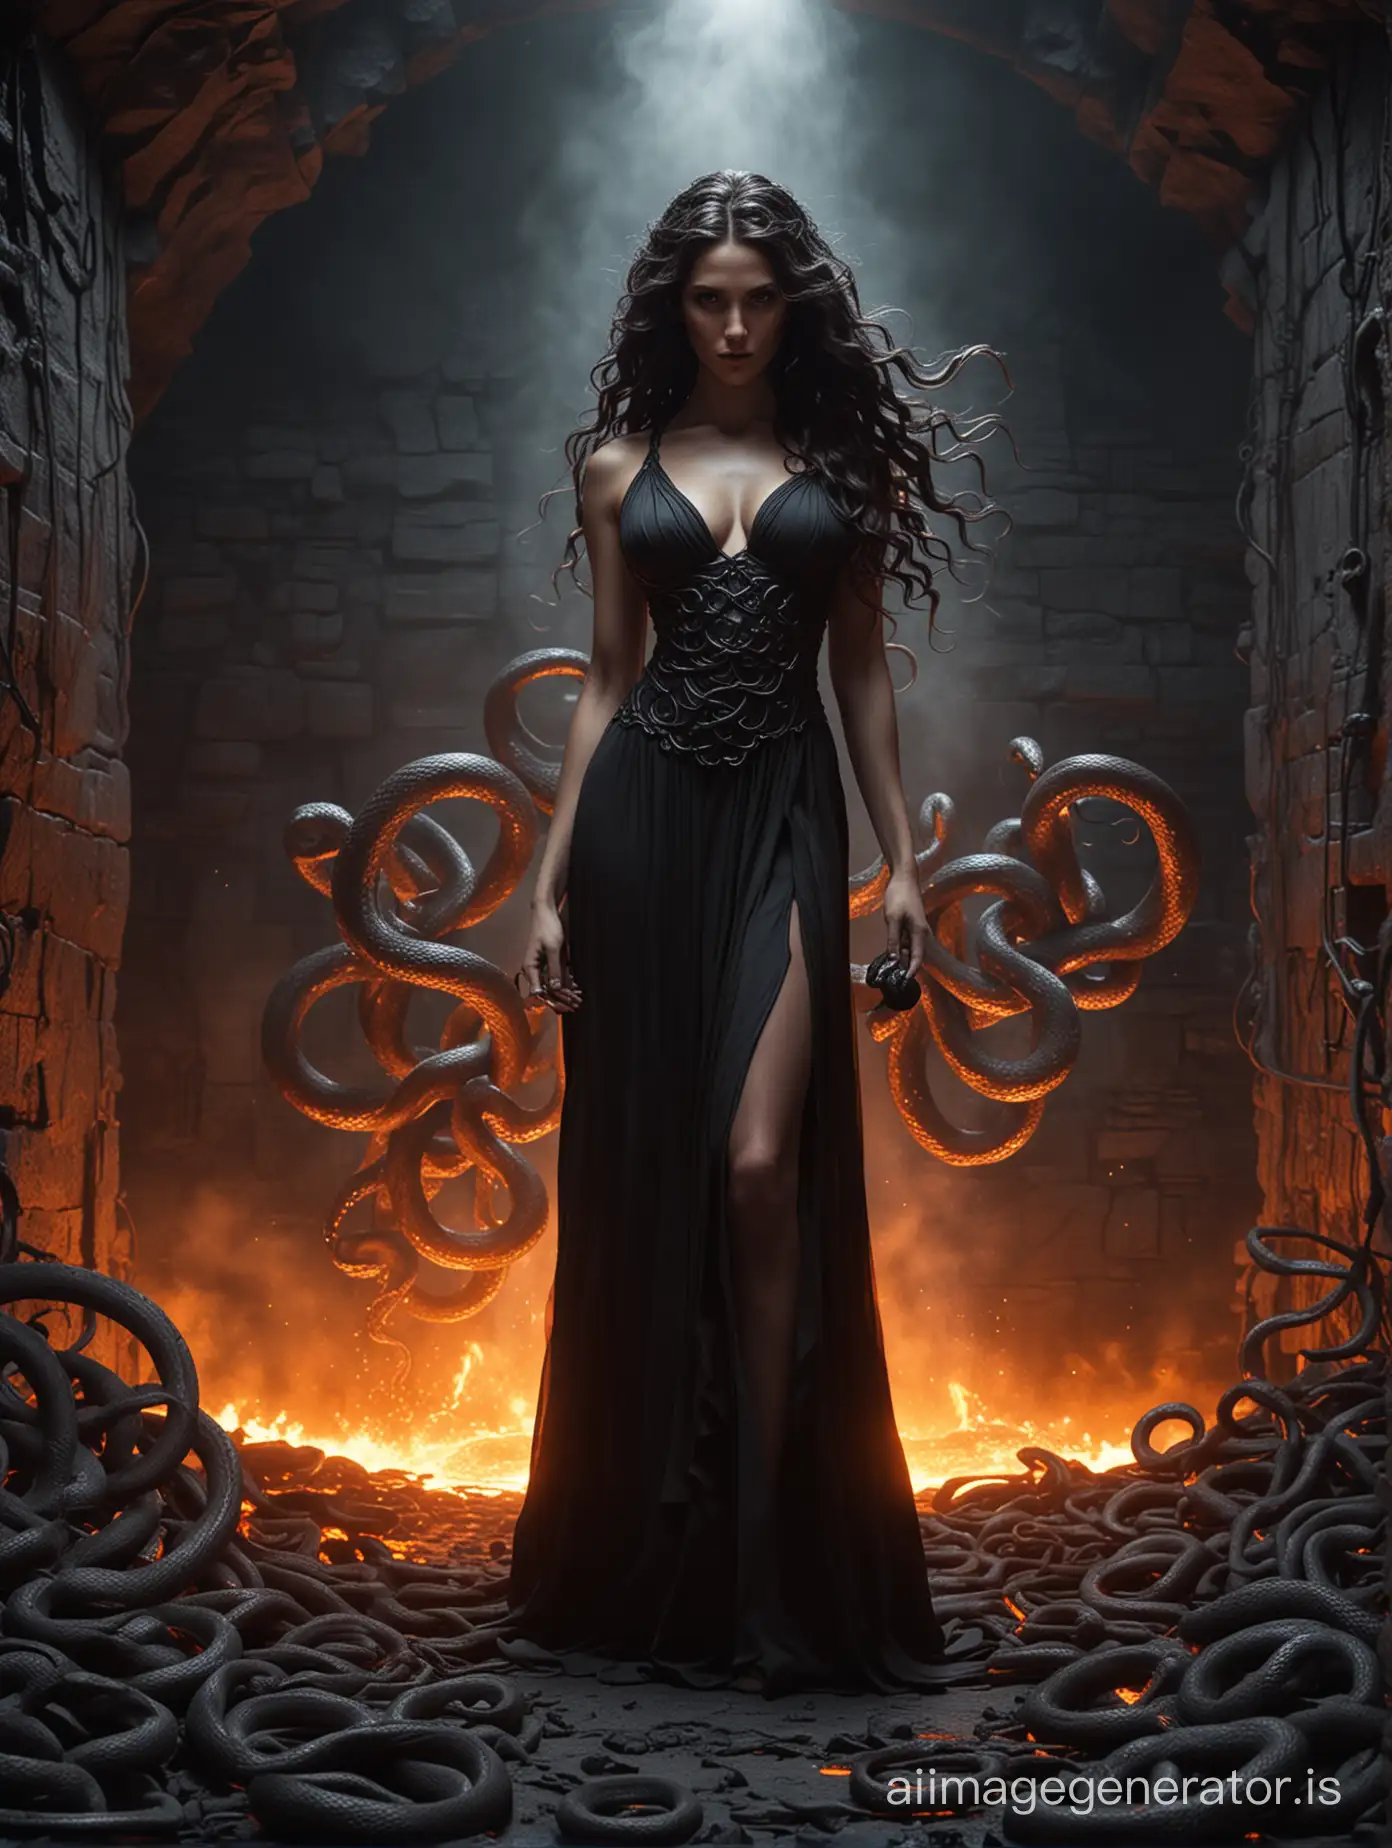 Mythological-Medusa-in-Long-Black-Dress-with-Hair-of-Snakes-Amidst-Lava-Glow